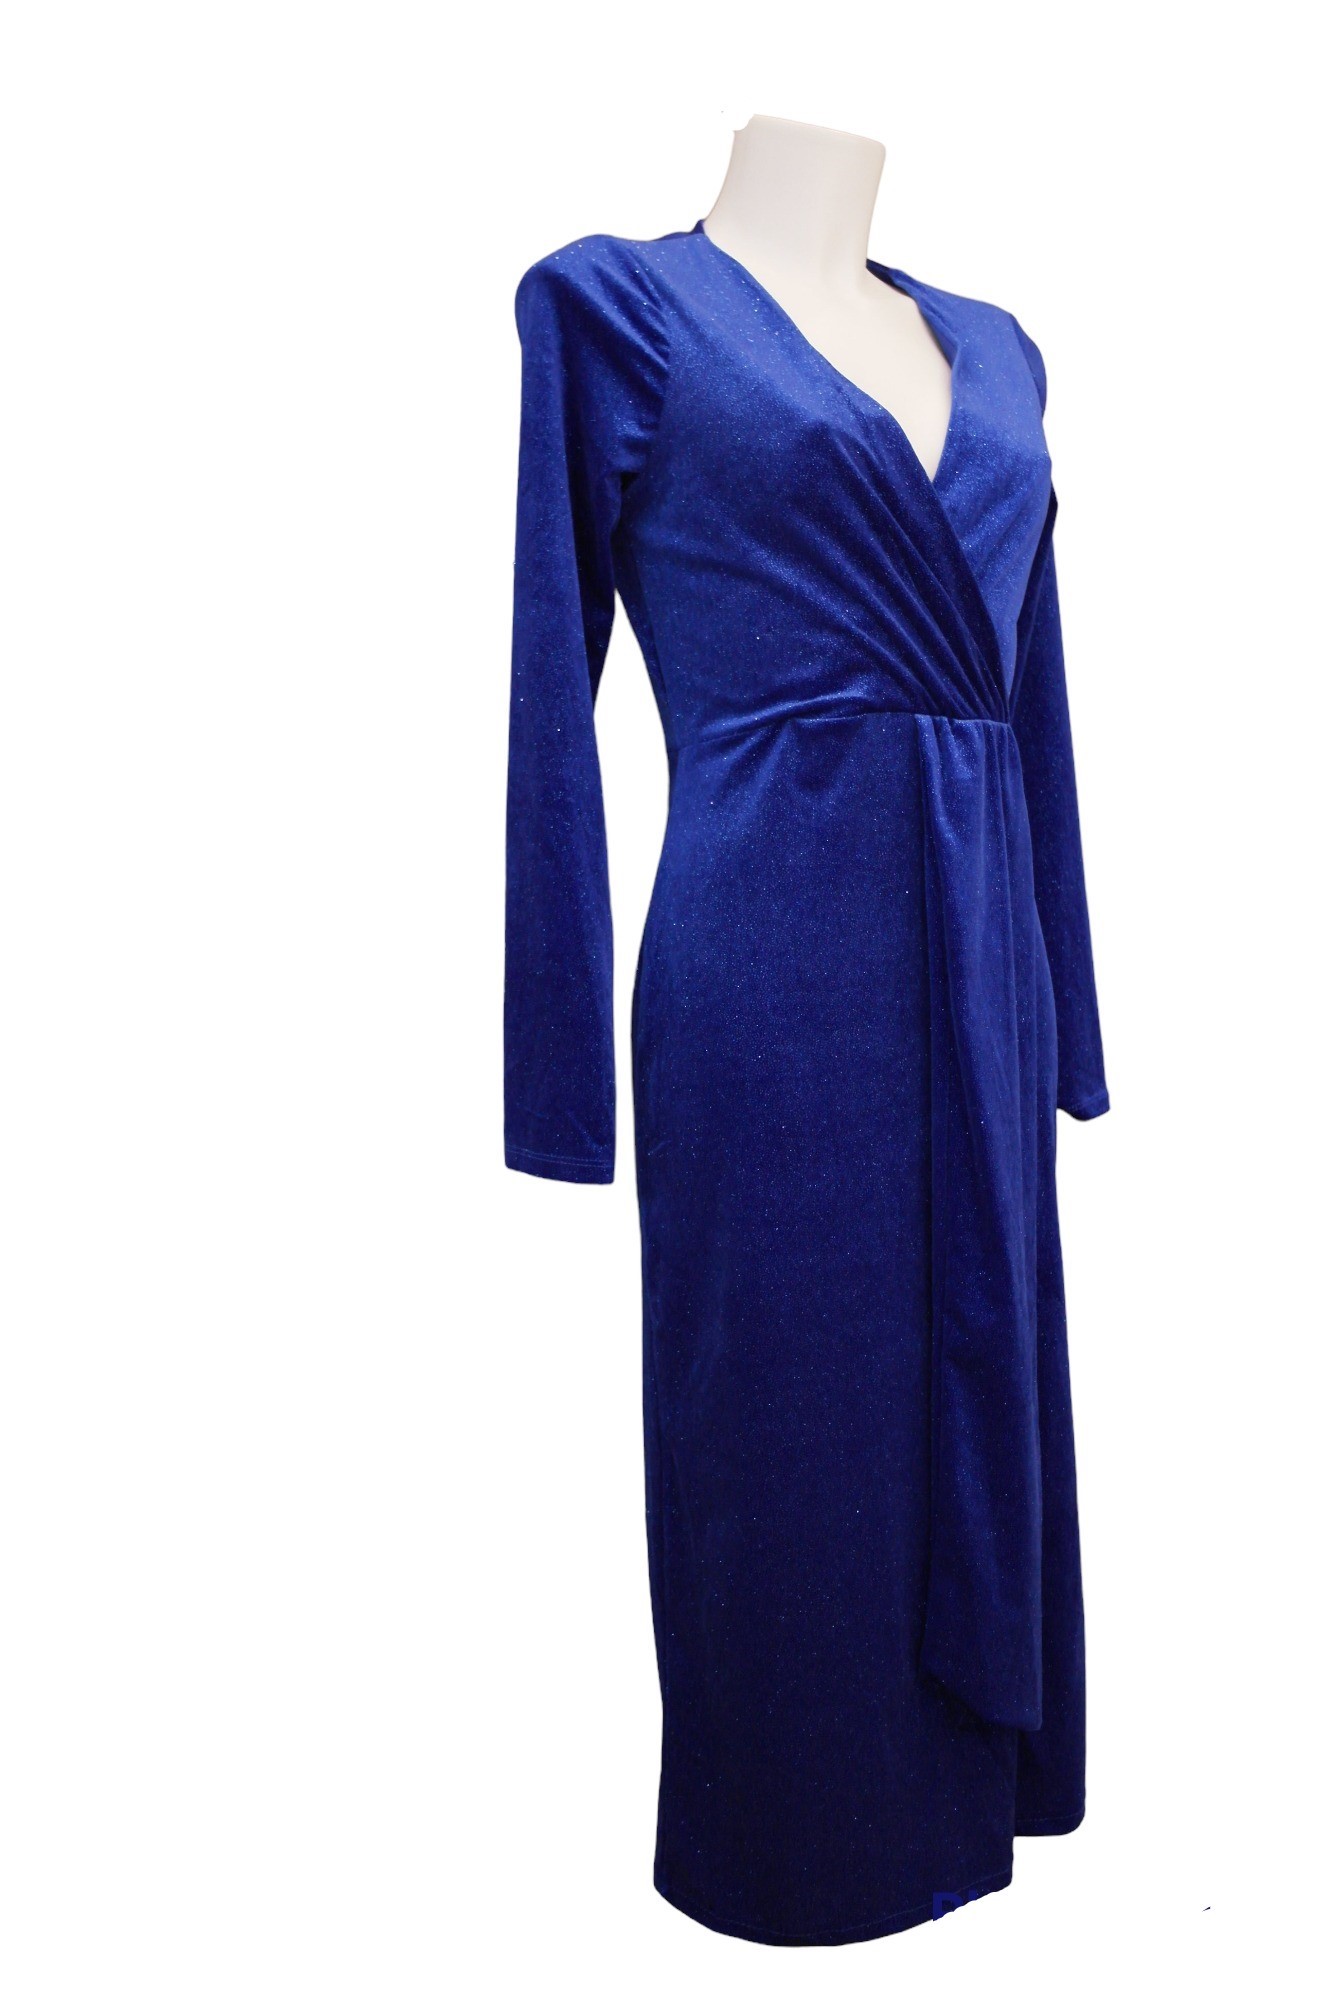 Midi Φόρεμα Κρουαζέ Βελούδινο Μπλε ρουά BQAD2201